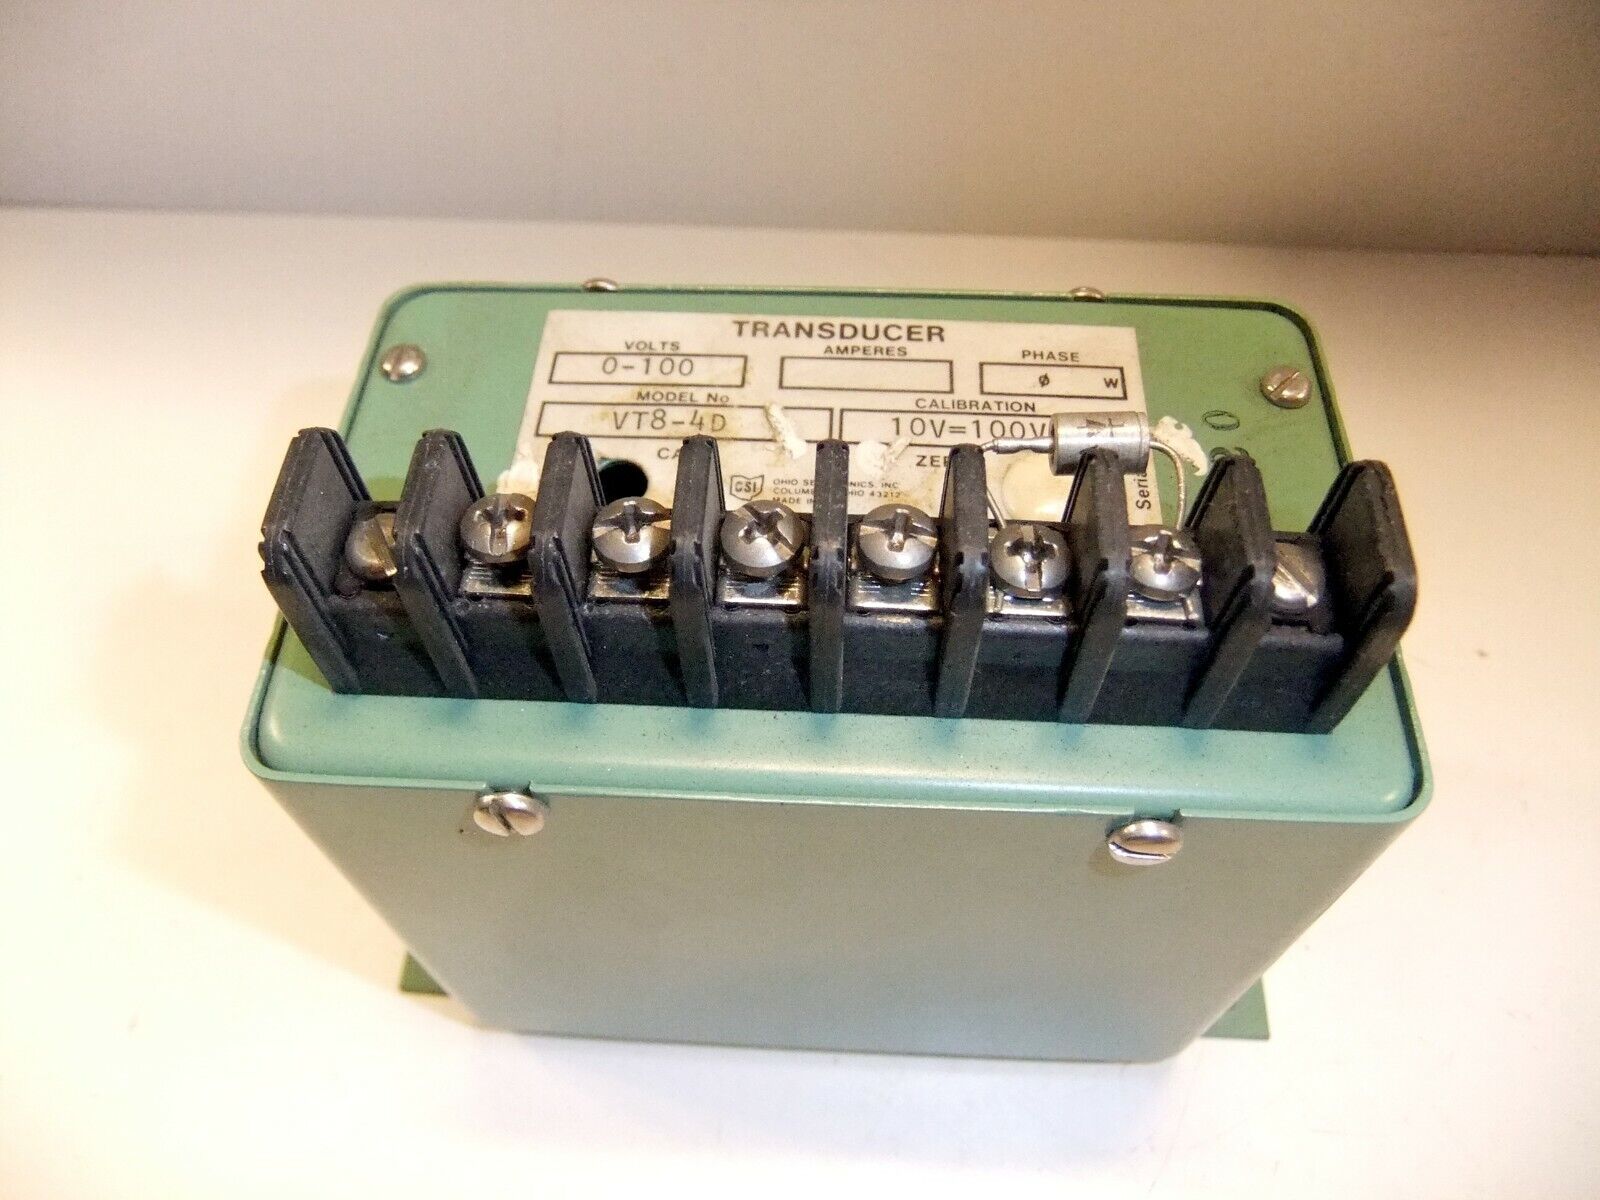 Ohio Semitronics Transducer VT8-4D